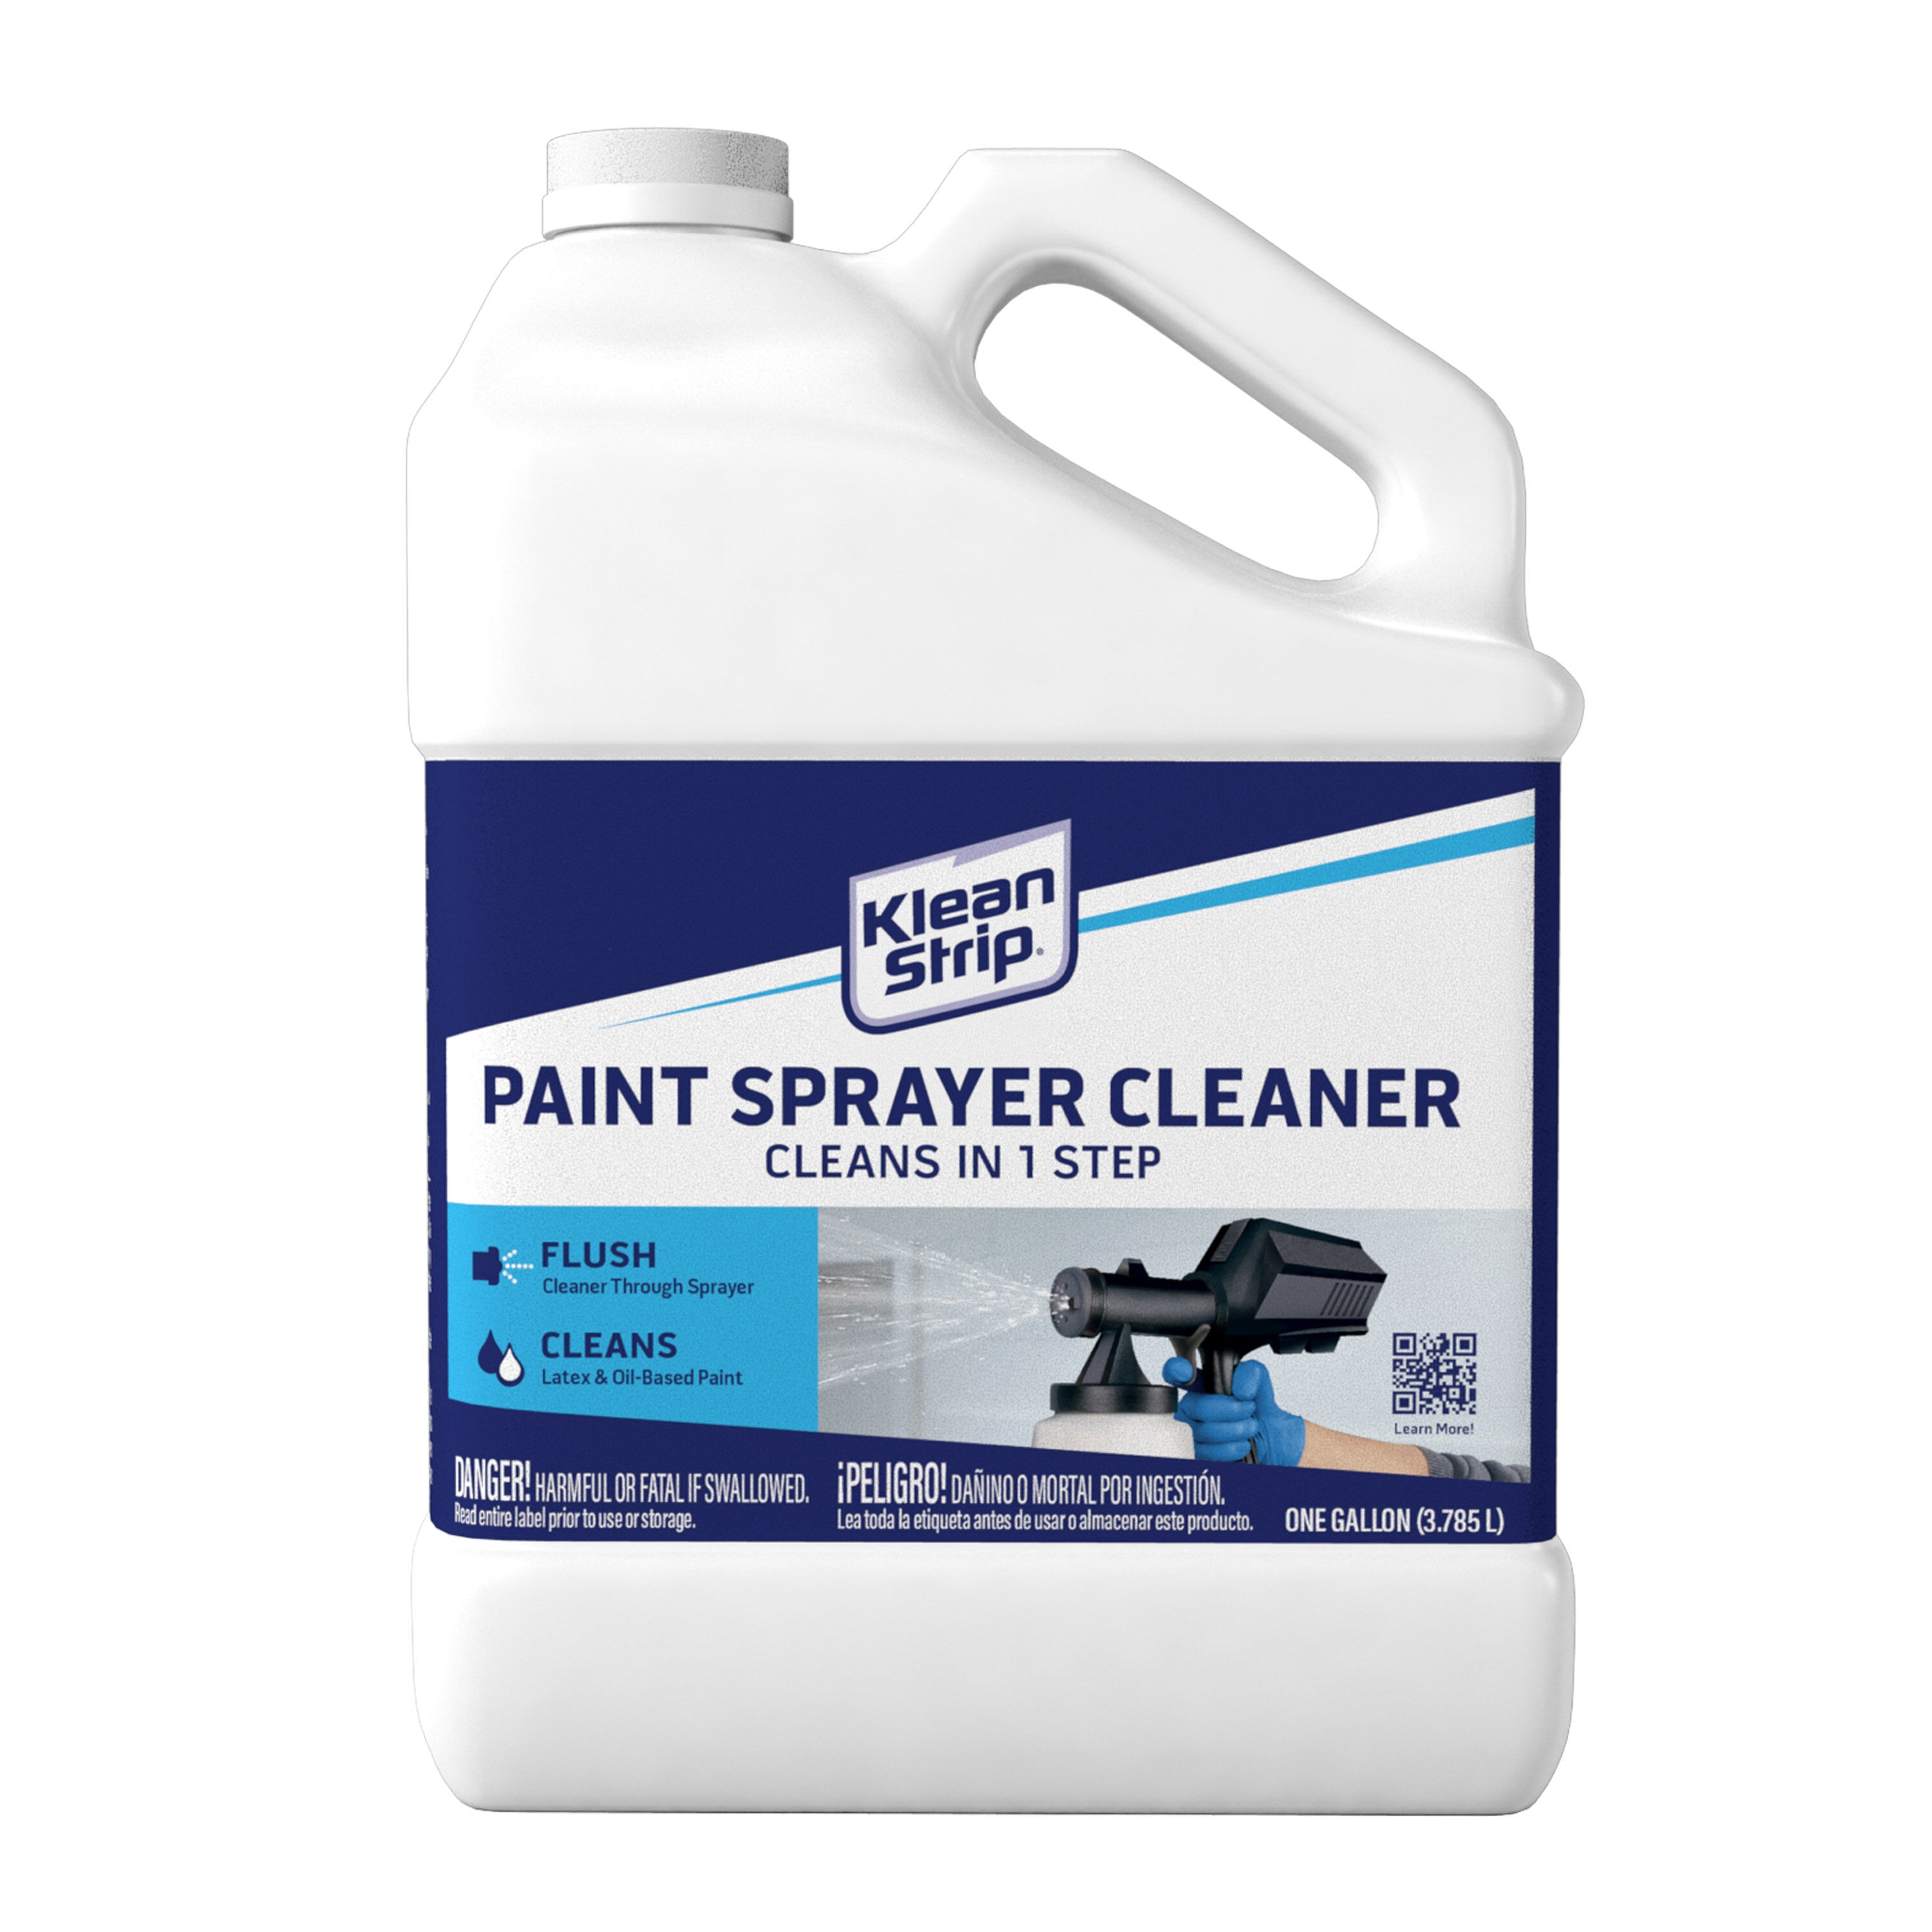 Klean Strip Klean-Strip Paint Sprayer Cleaner, 1 Gallon - Removes